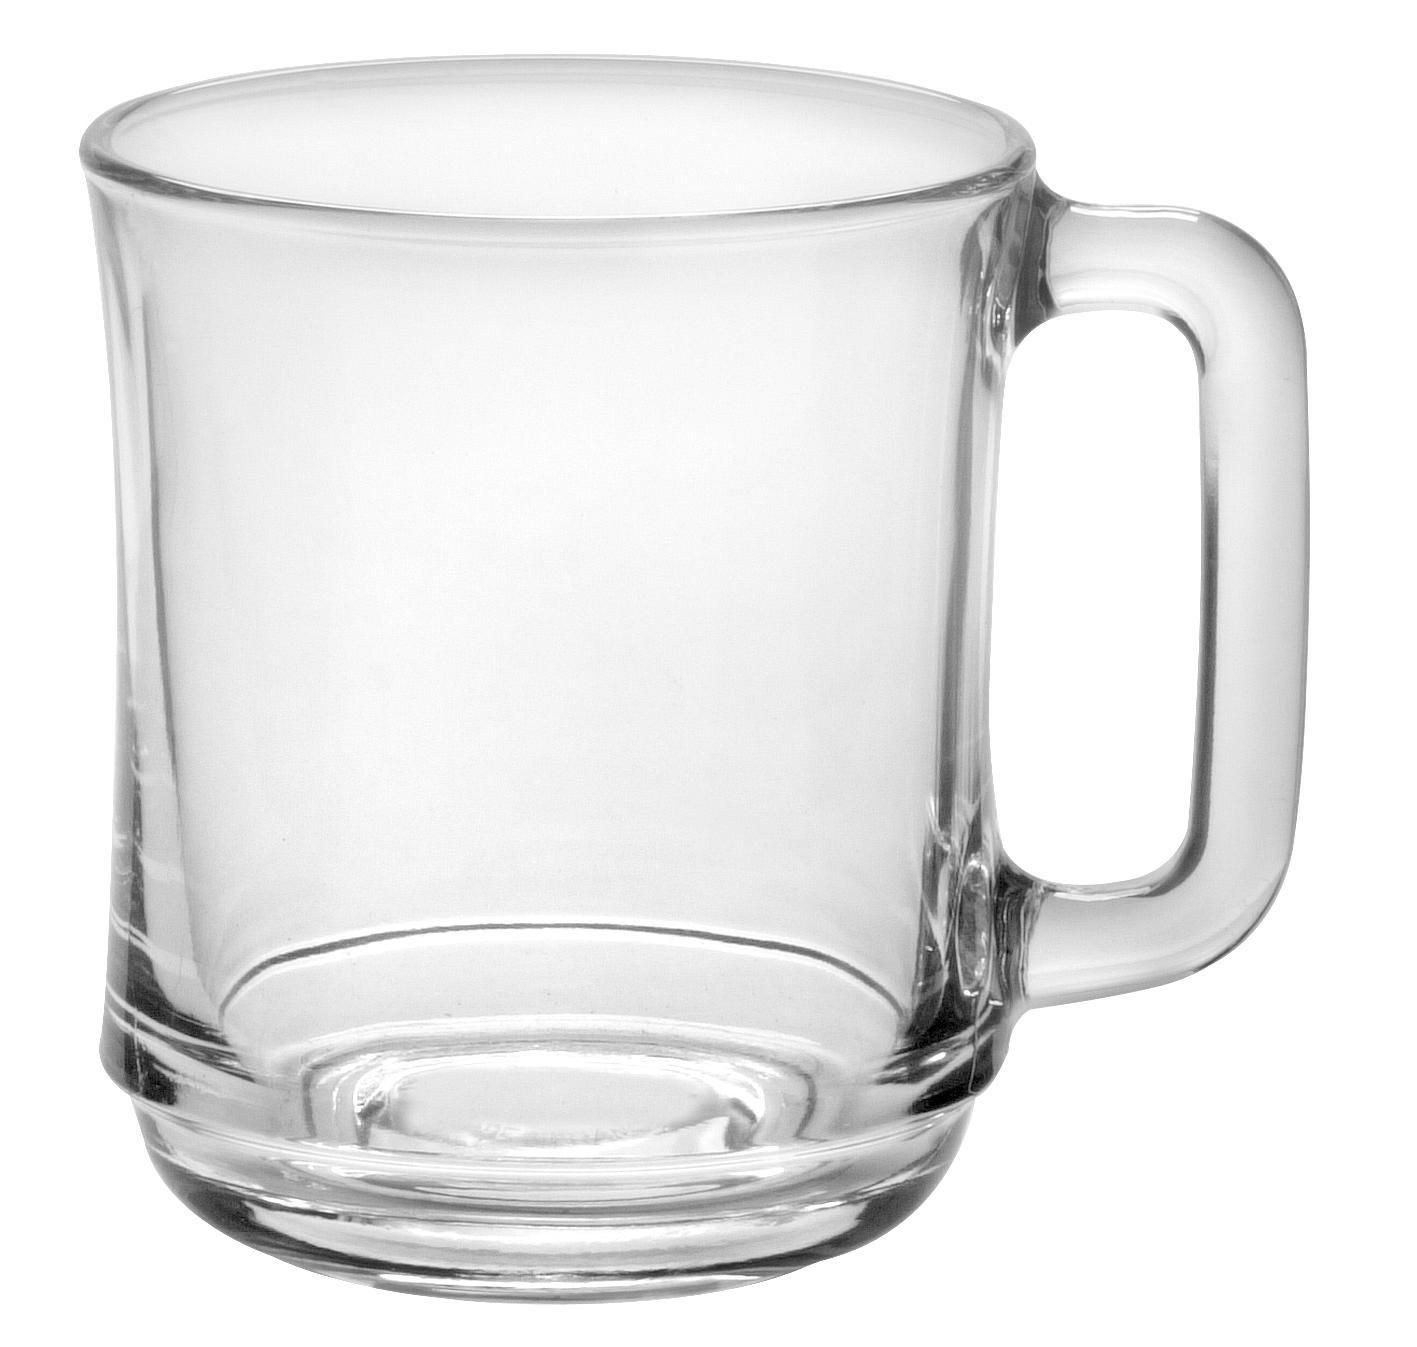 Duralex Lys Stackable Clear Mug 310 ml Set of 6 | Walmart Canada